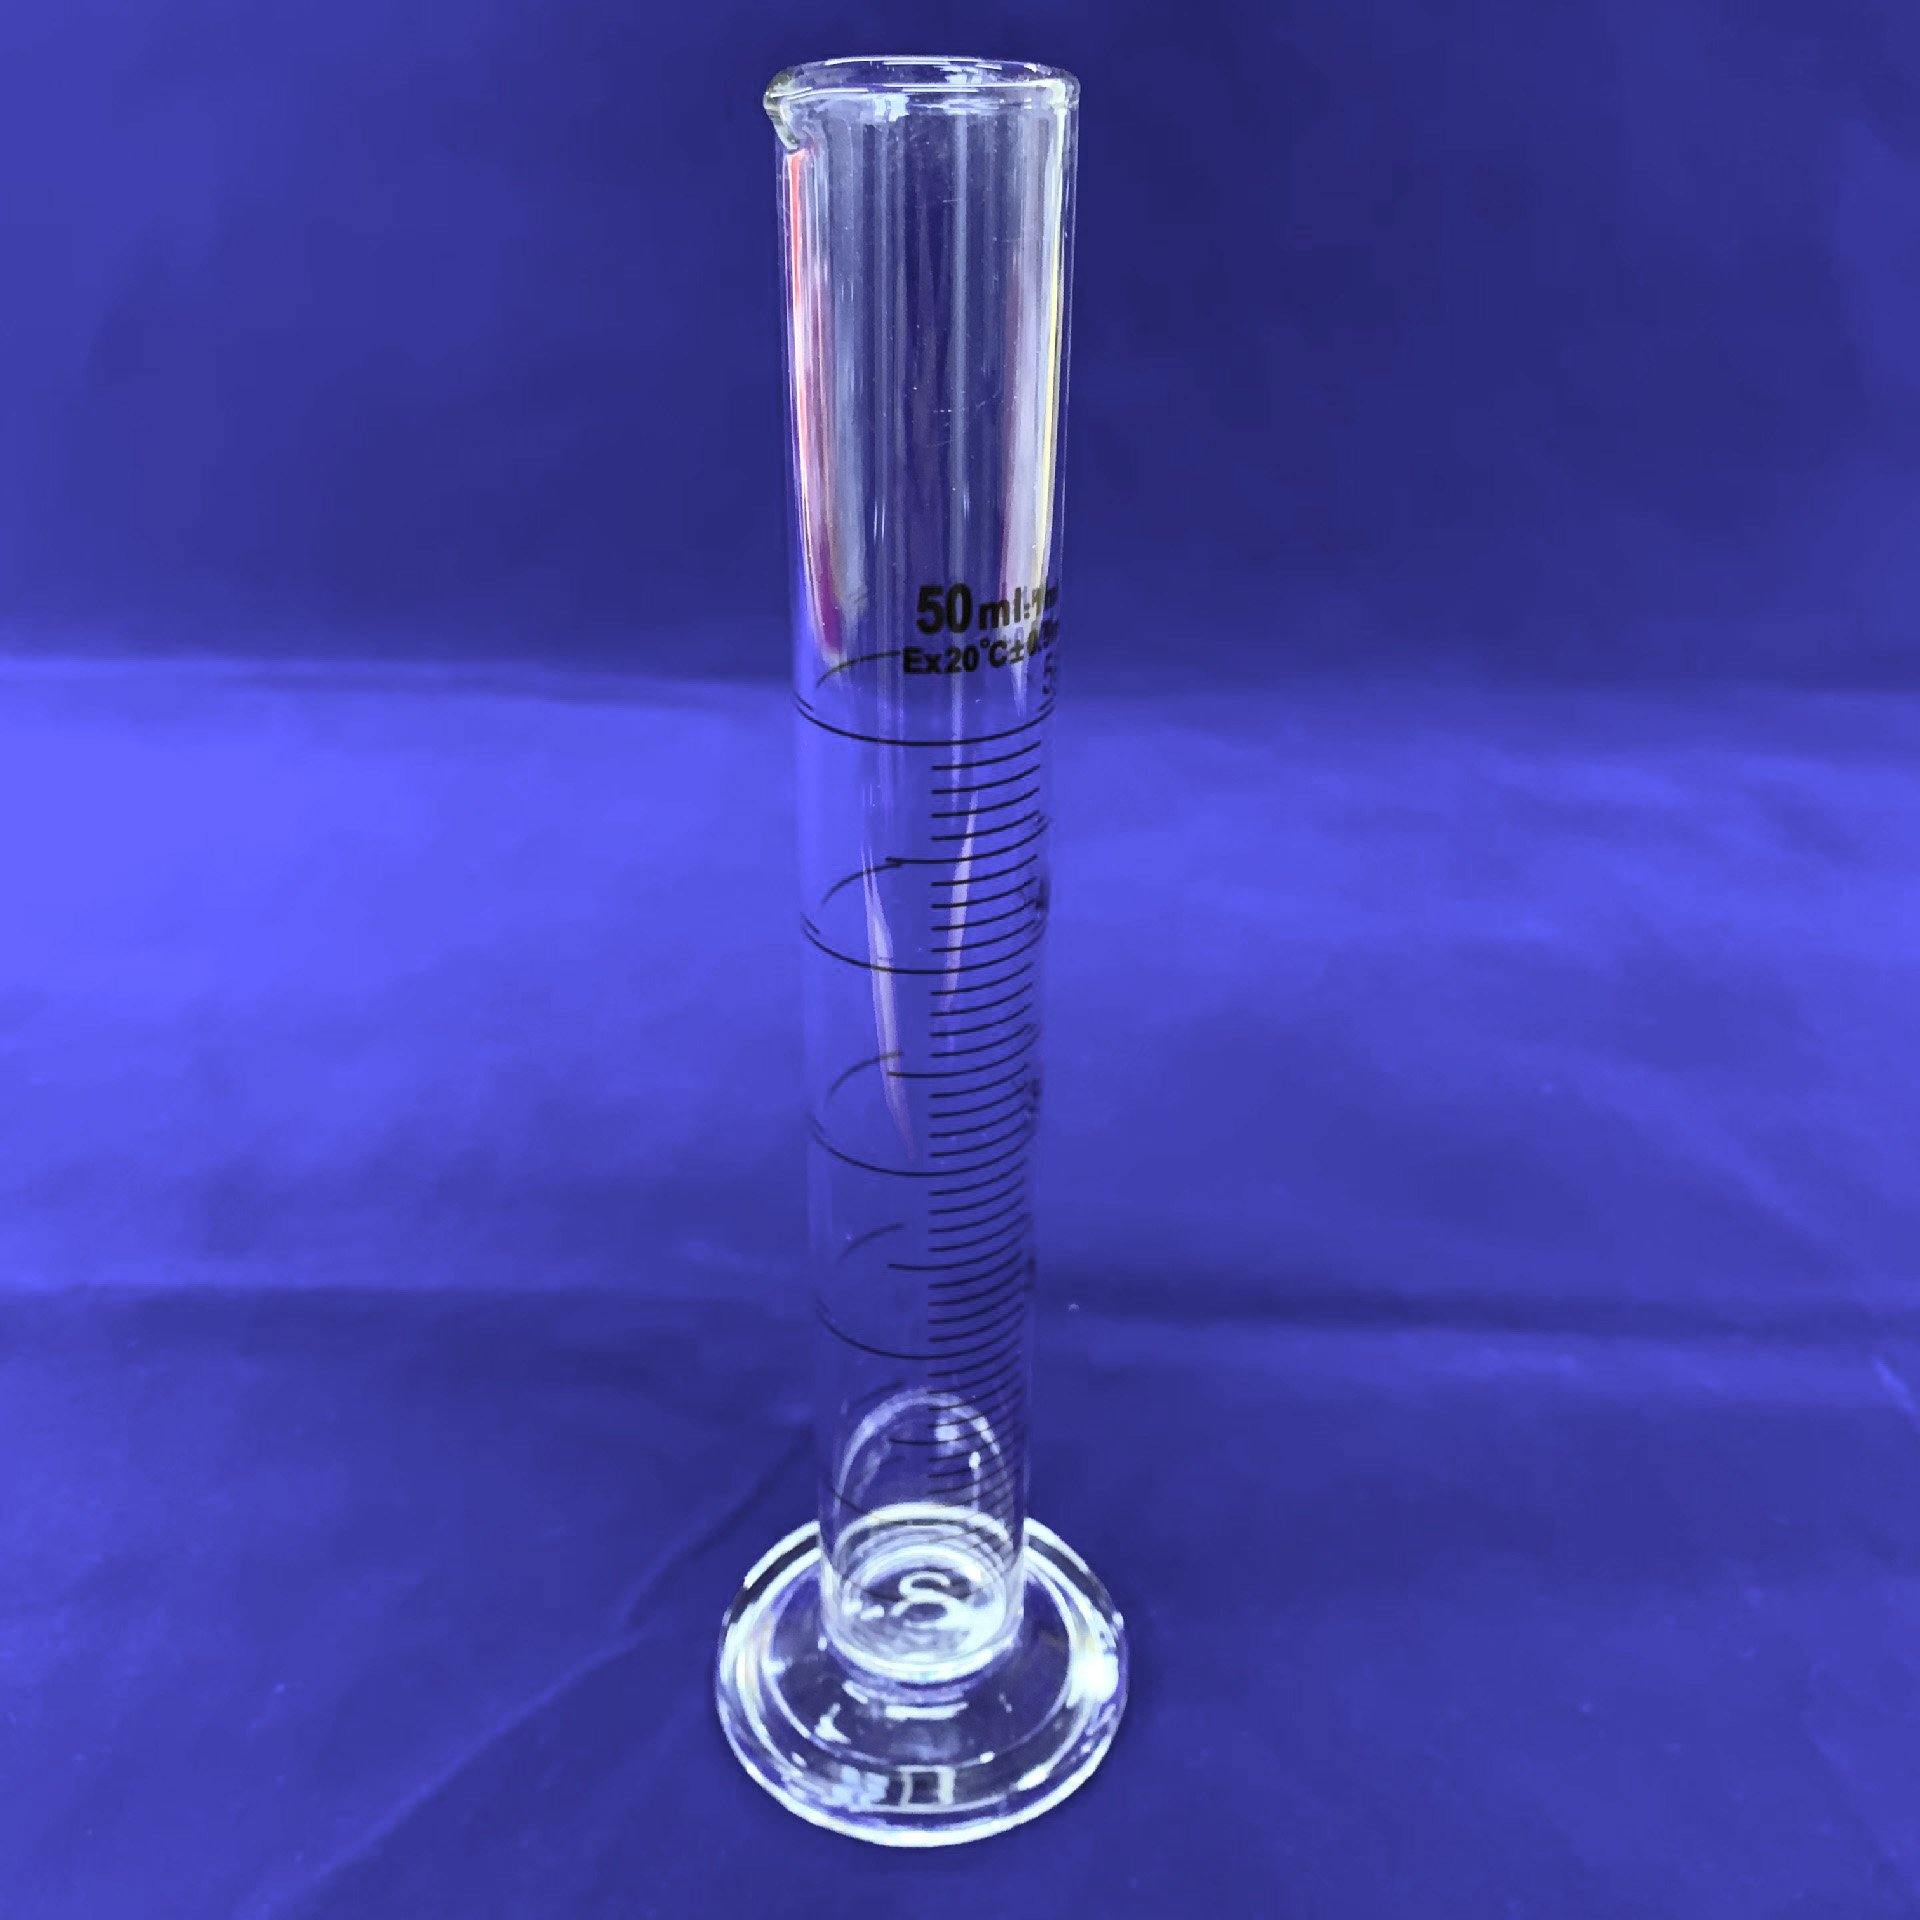 Quartz measuring cylinder with Graduation 5ml to 1000ml - MICQstore